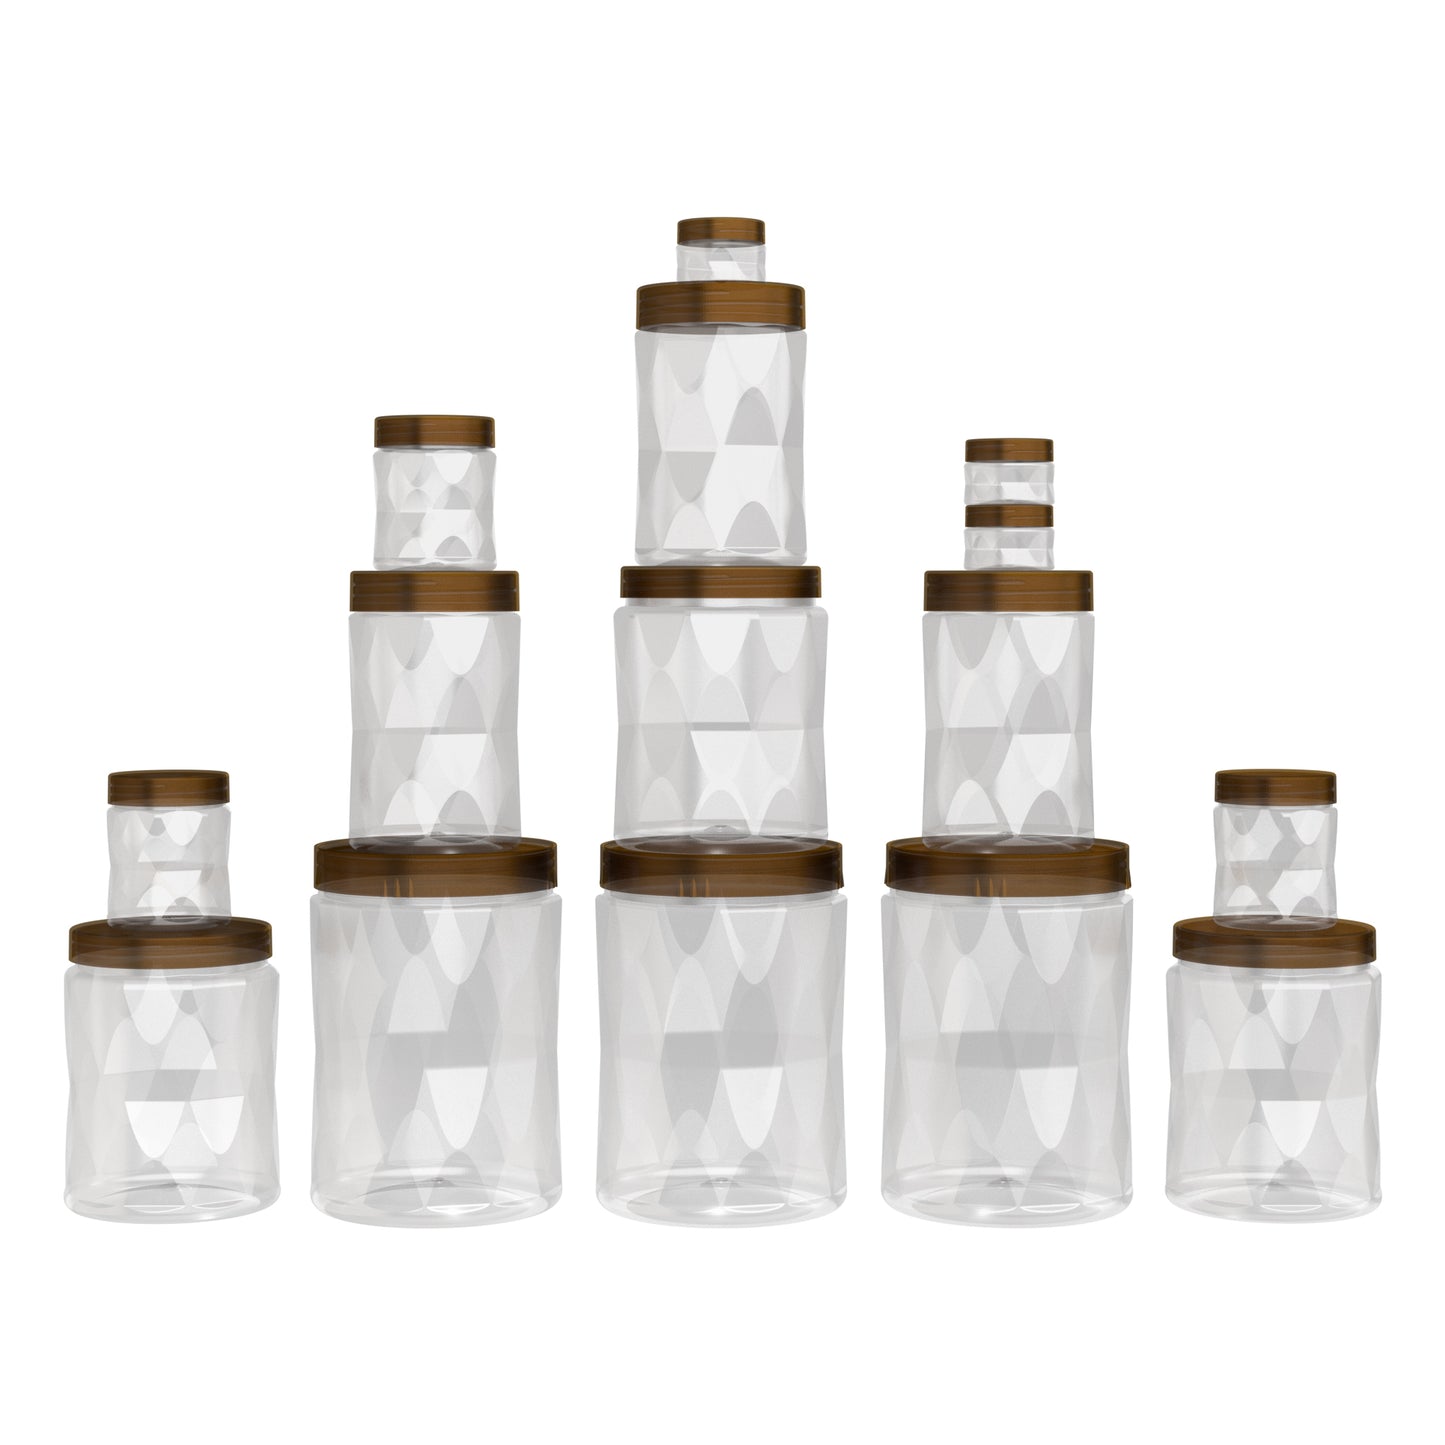 G-PET Diamonds Jars Plastic Container Coffee Cap (Set Of 15B) 2000ml (3pcs), 1000ml (3pcs), 700ml (3pcs), 200ml (3pcs), 50ml (3pcs)